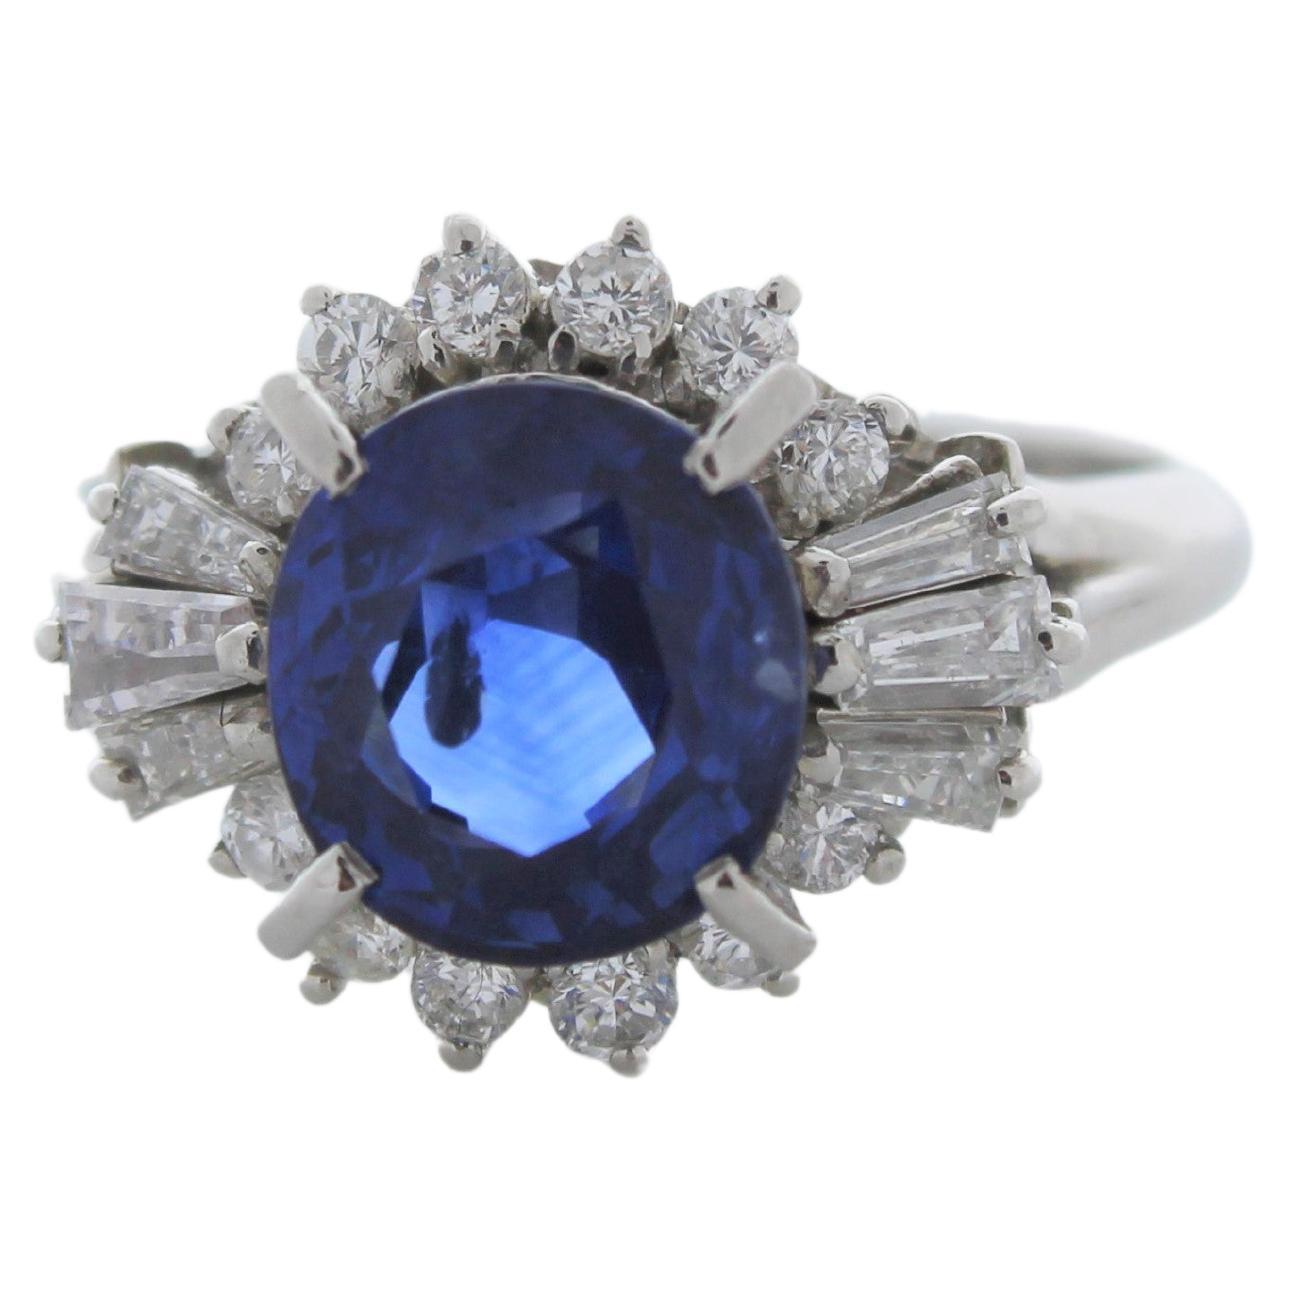 2.72 Carat Round Blue Sapphire and Diamond Ring in Platinum